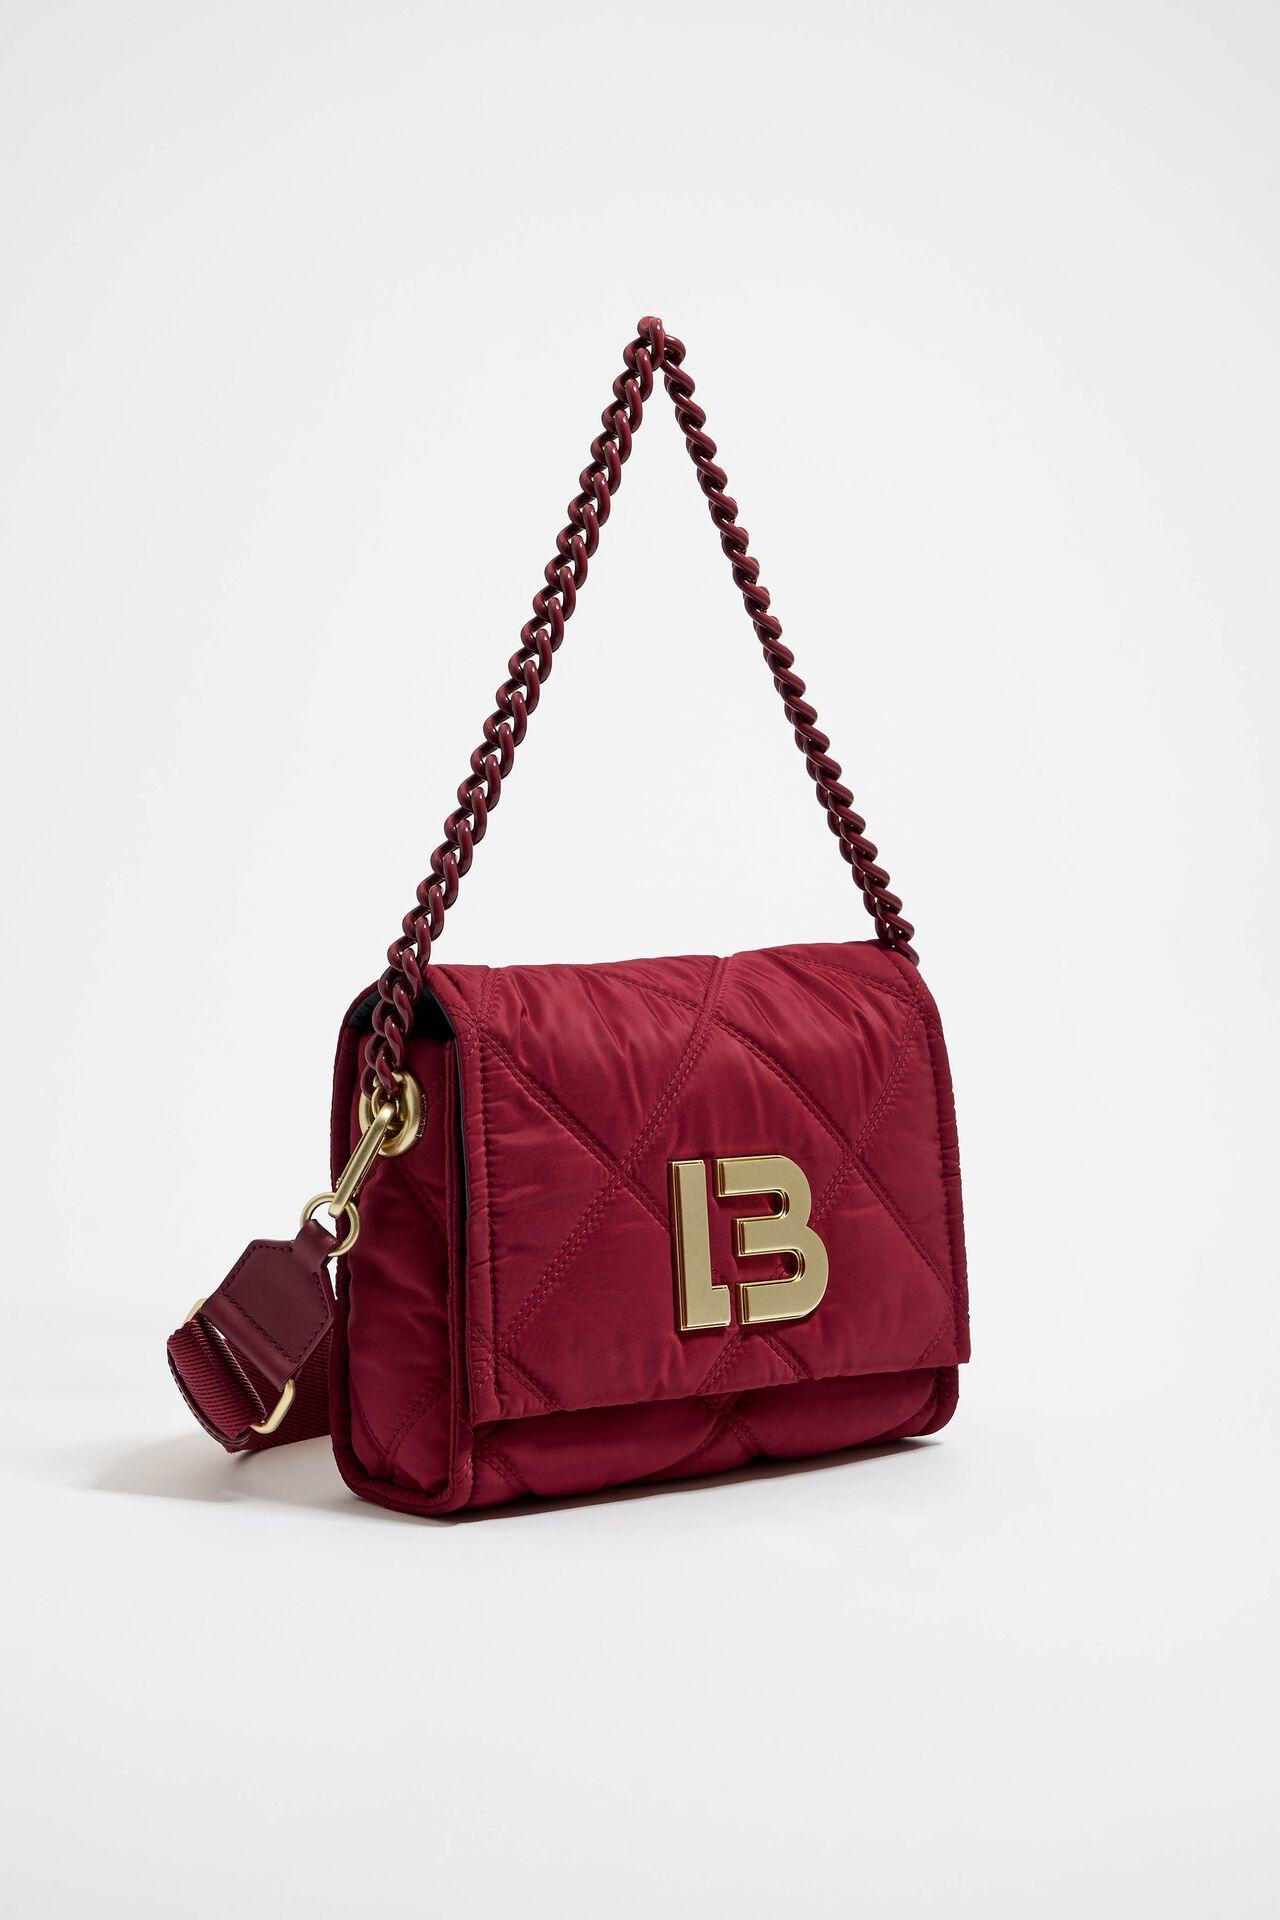 Balenciaga Red Velvet BB Chain Crossbody Bag